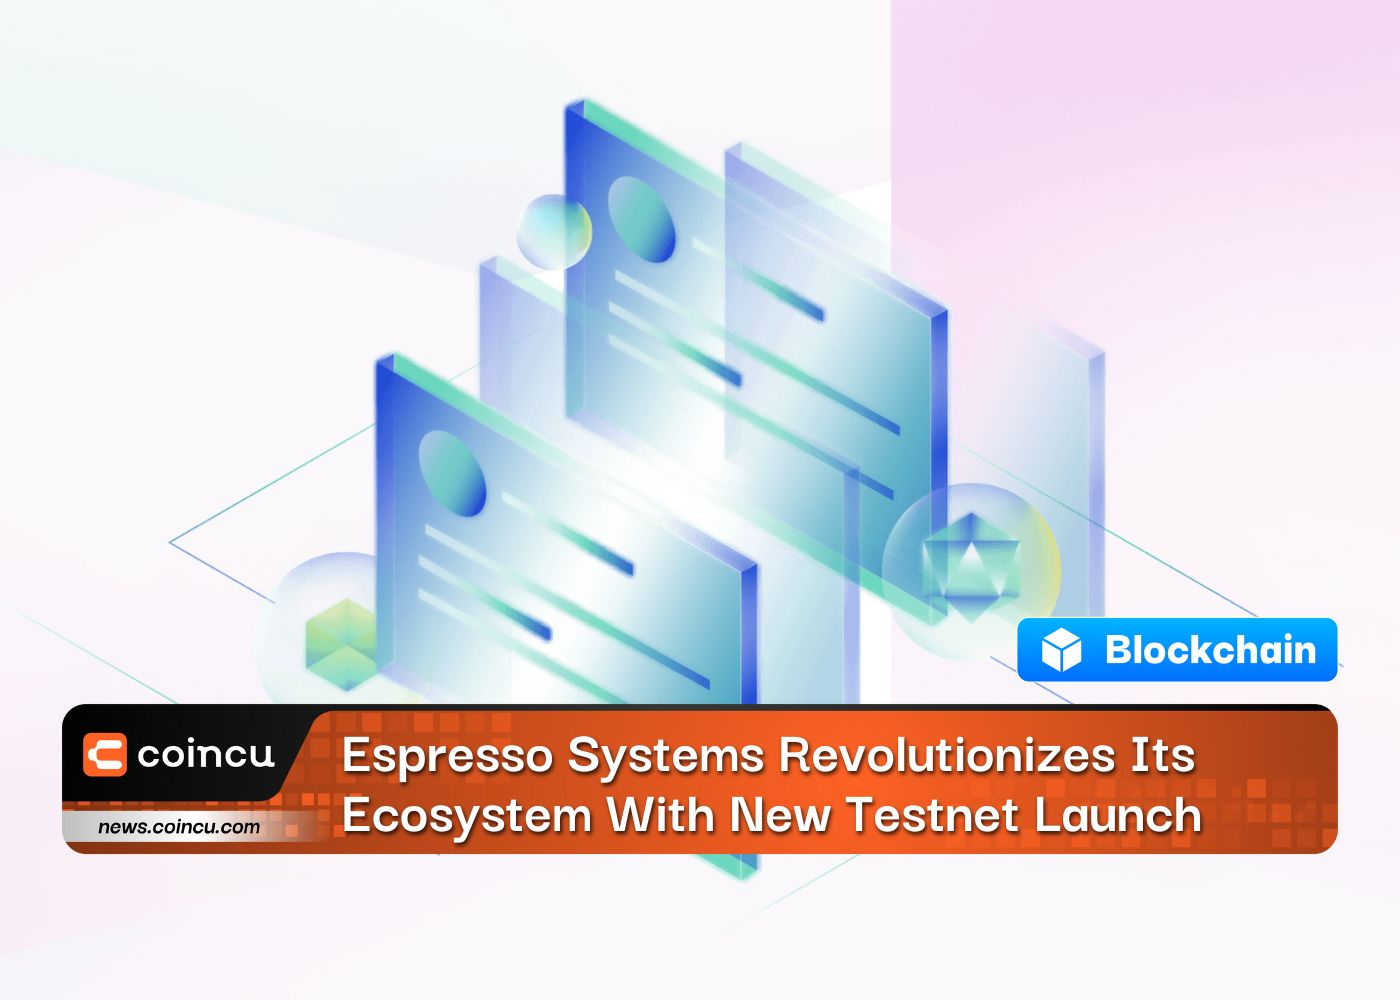 Espresso Systems Revolutionizes Its Ecosystem With New Testnet Launch